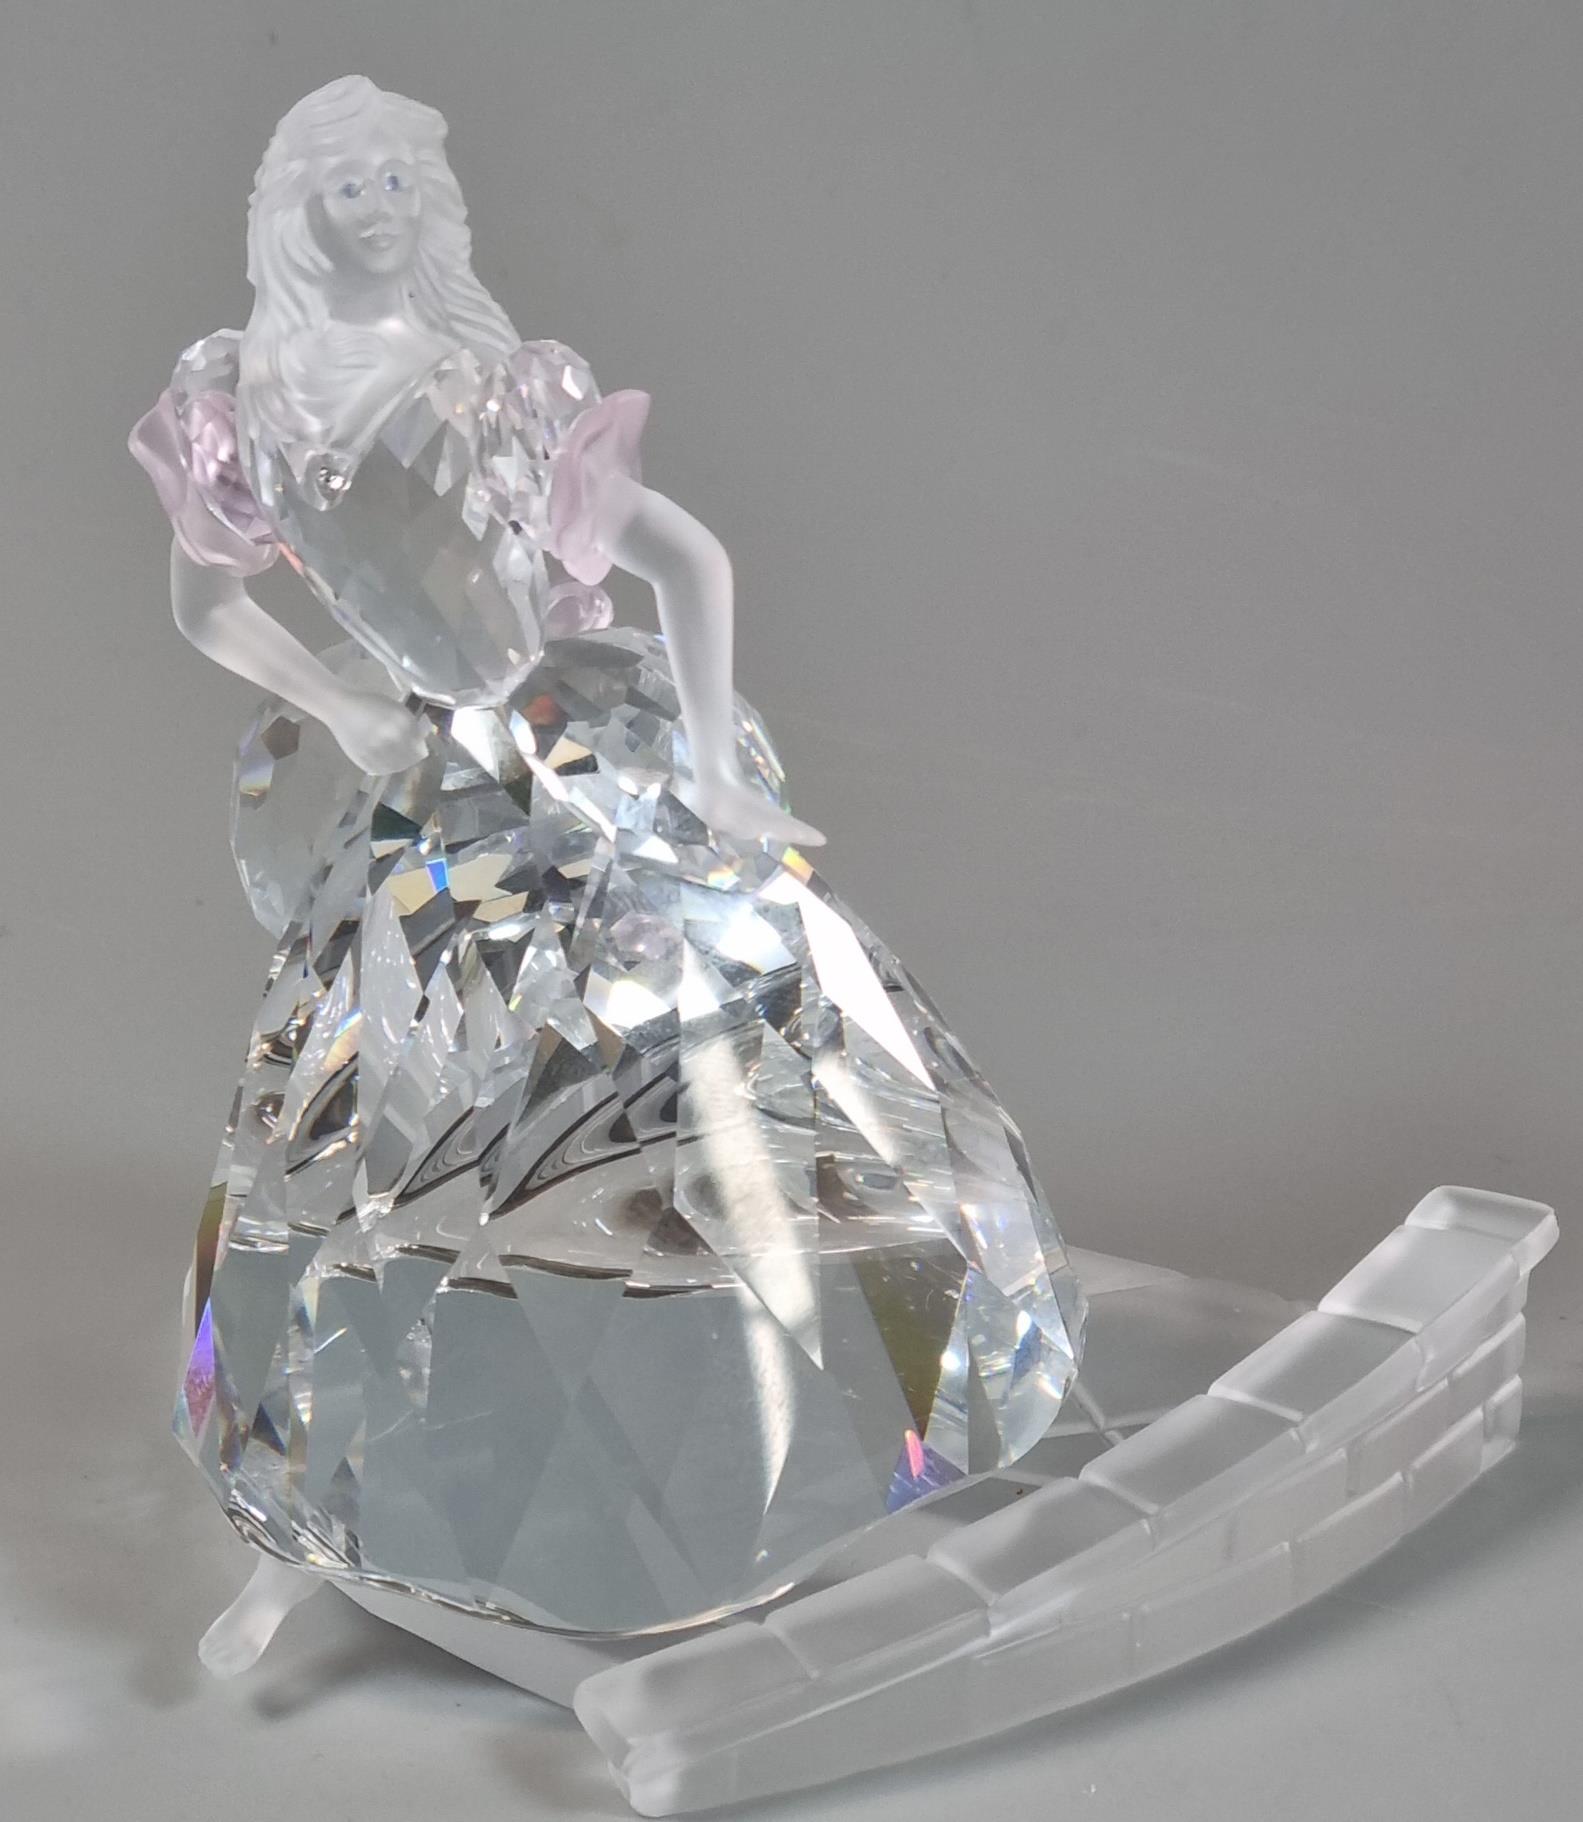 Swarovski Crystal Disney figure, Cinderella leaving the ball and losing her slipper. In original